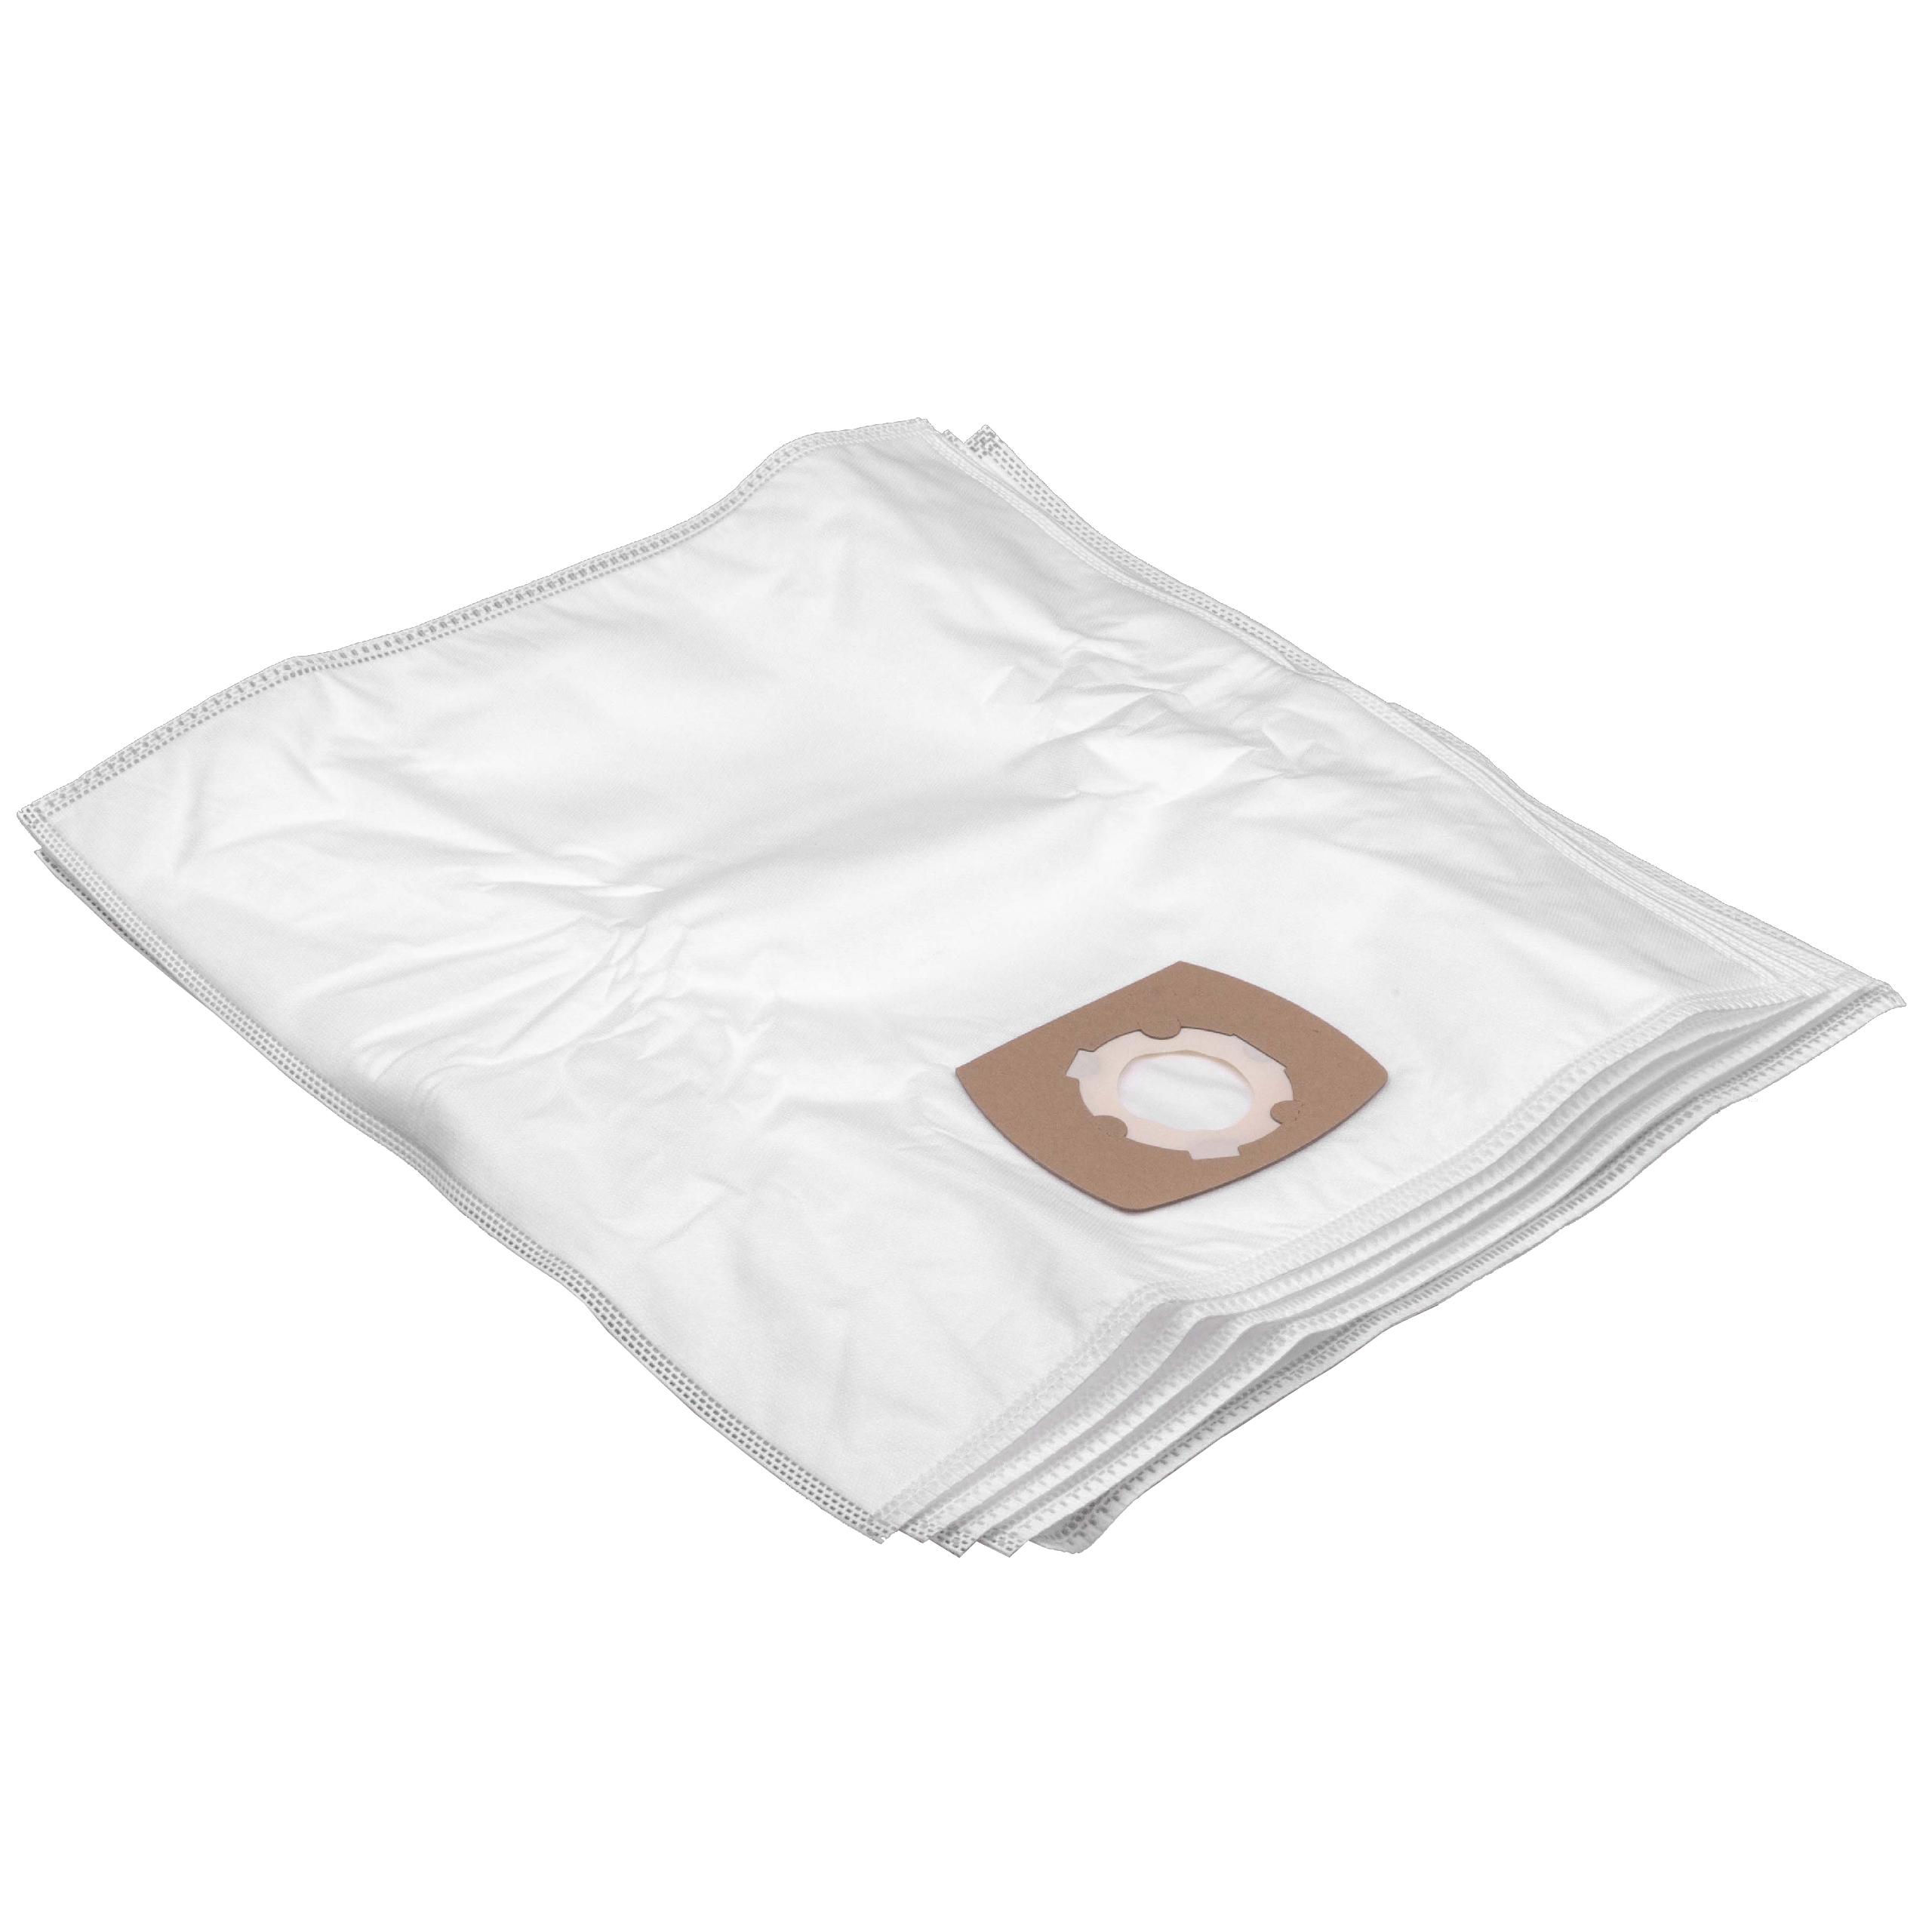 5x Vacuum Cleaner Bag replaces Grundig type G - hygiene bag for Satrap - microfleece